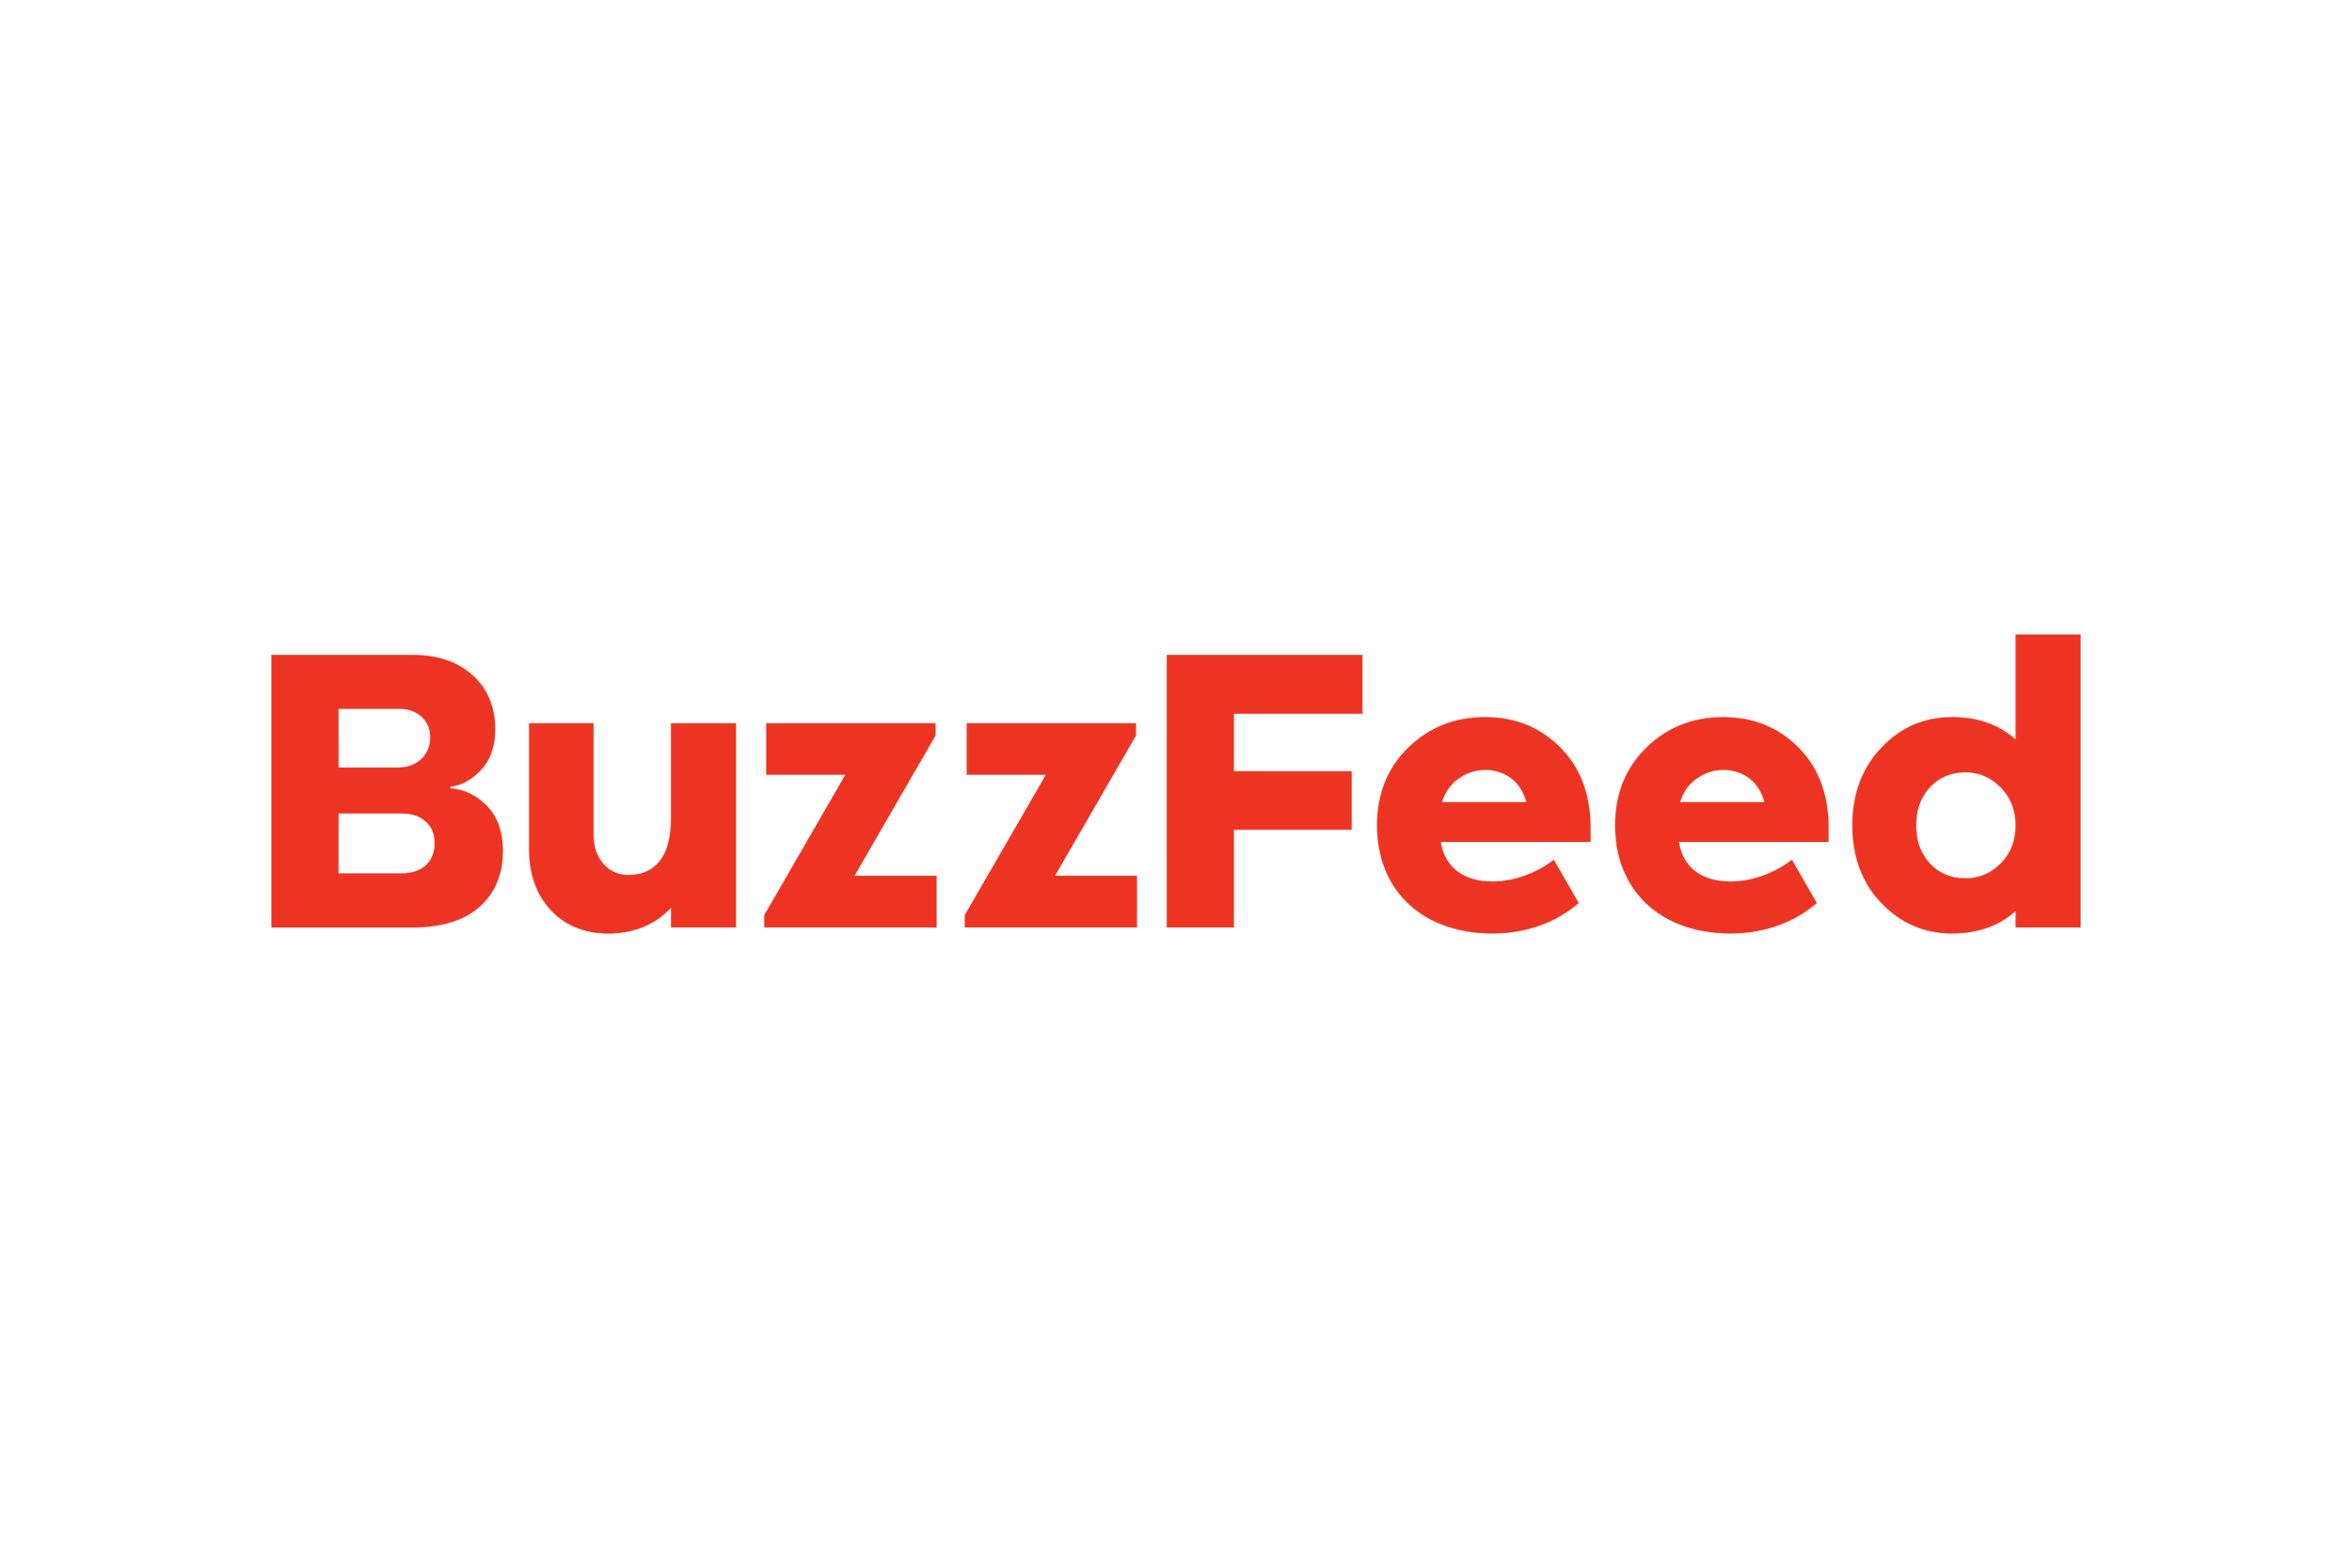 BuzzFeed-logo.png